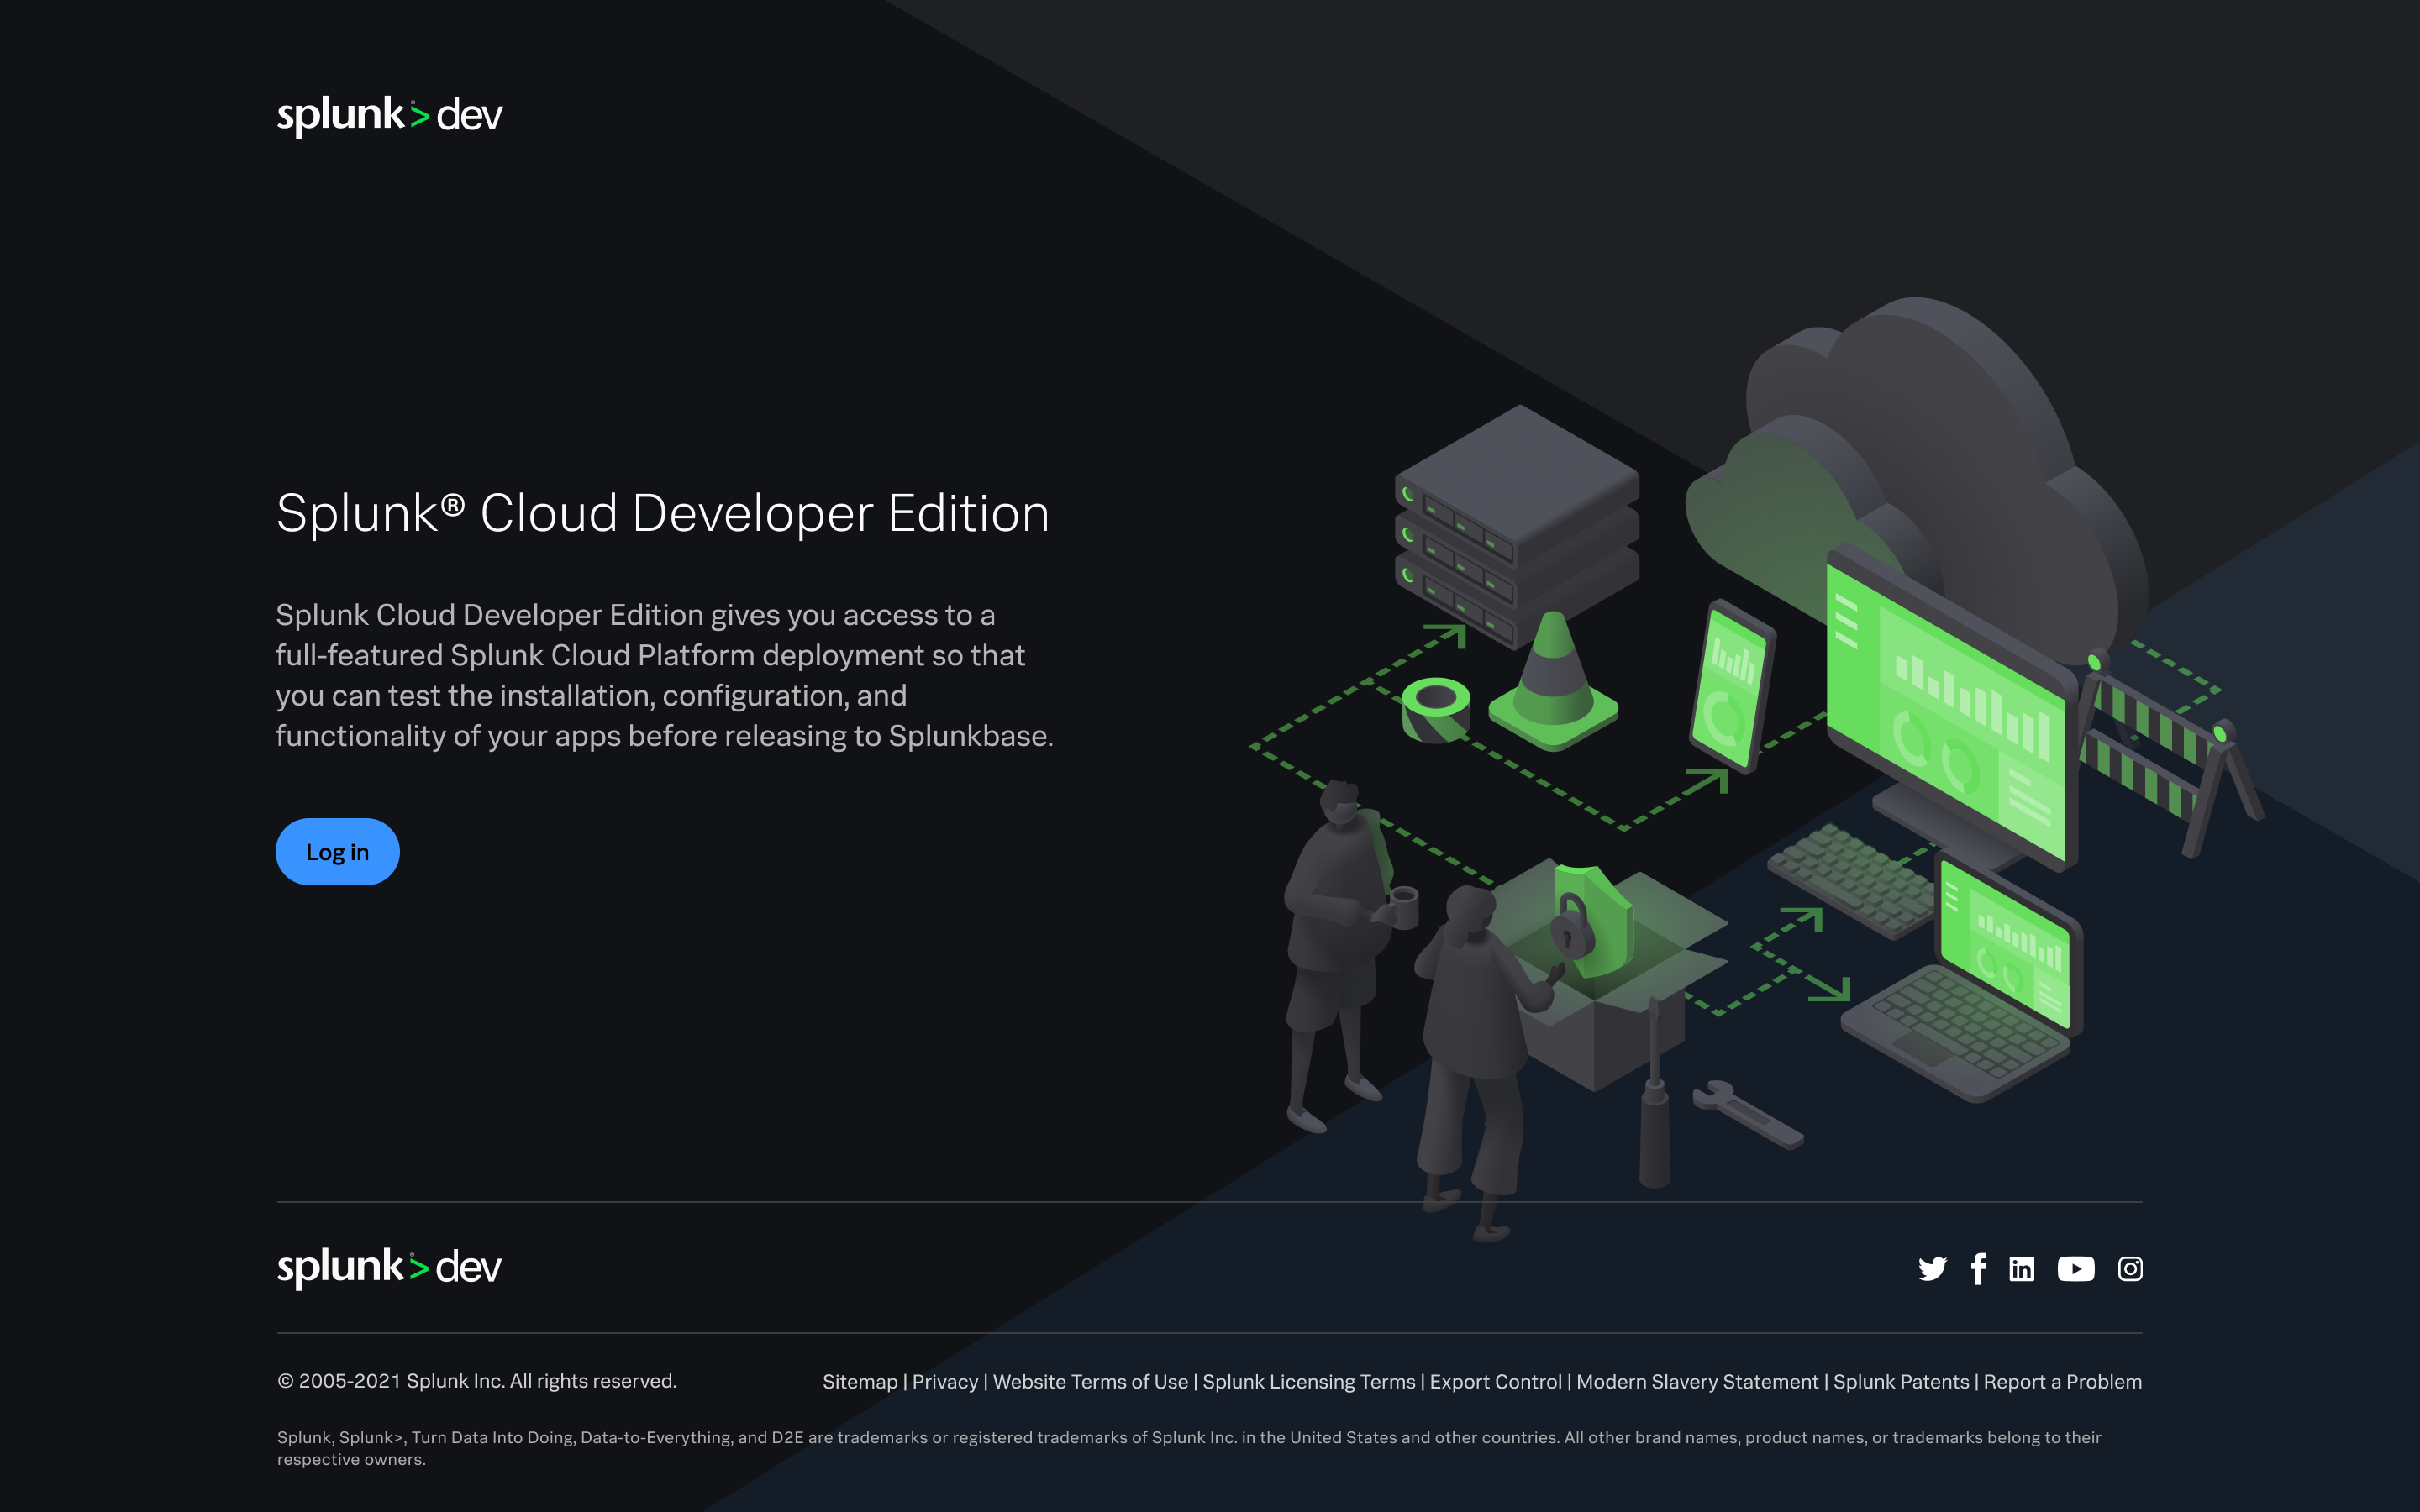 Splunk Cloud Developer Edition